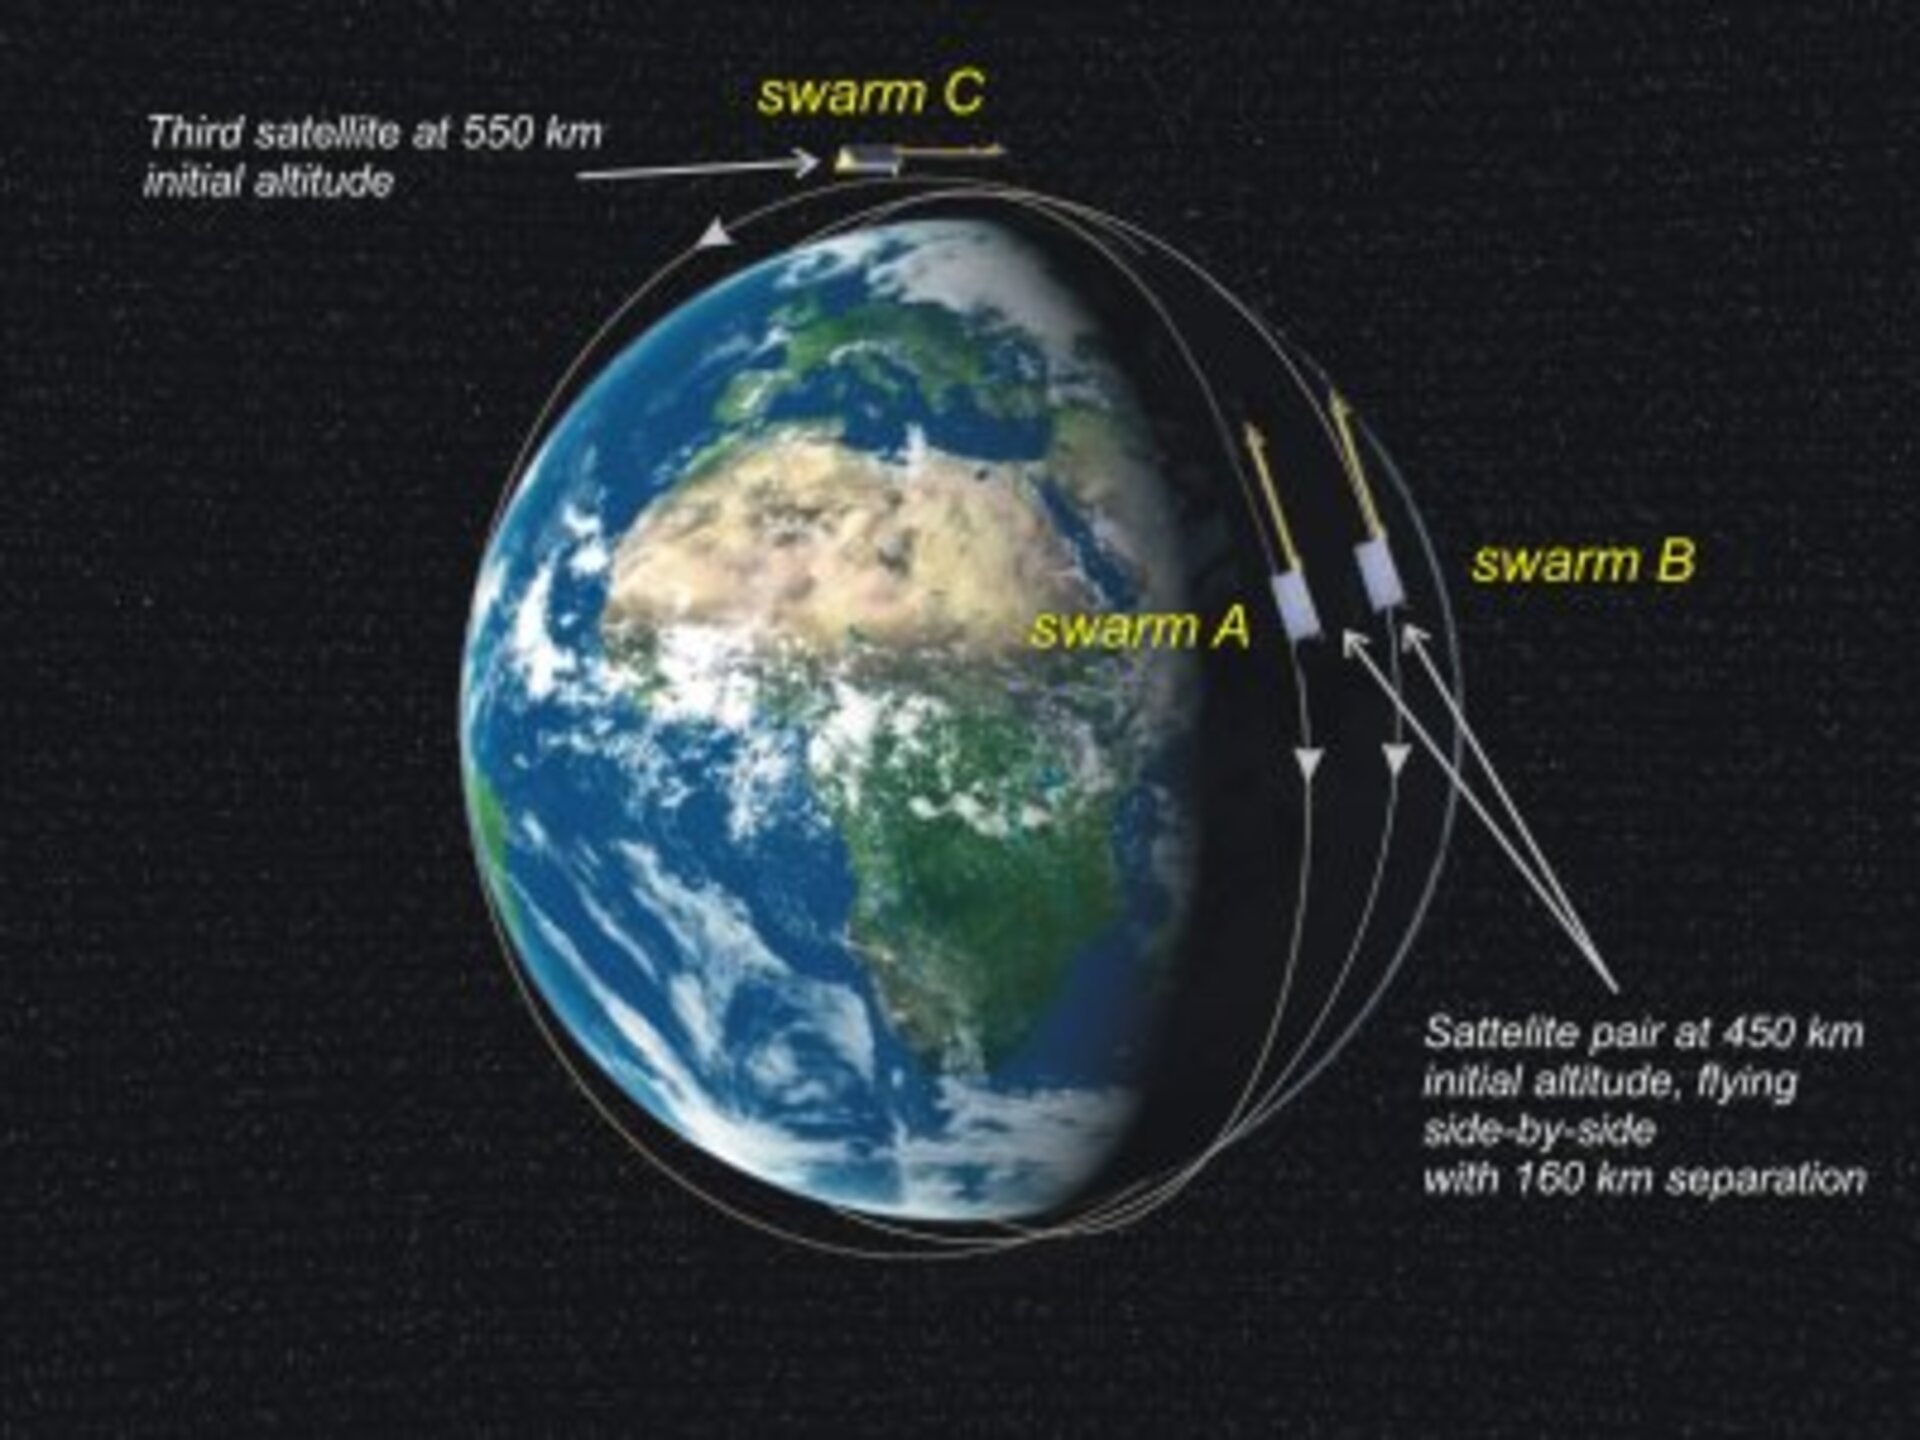 Three satellites for Swarm